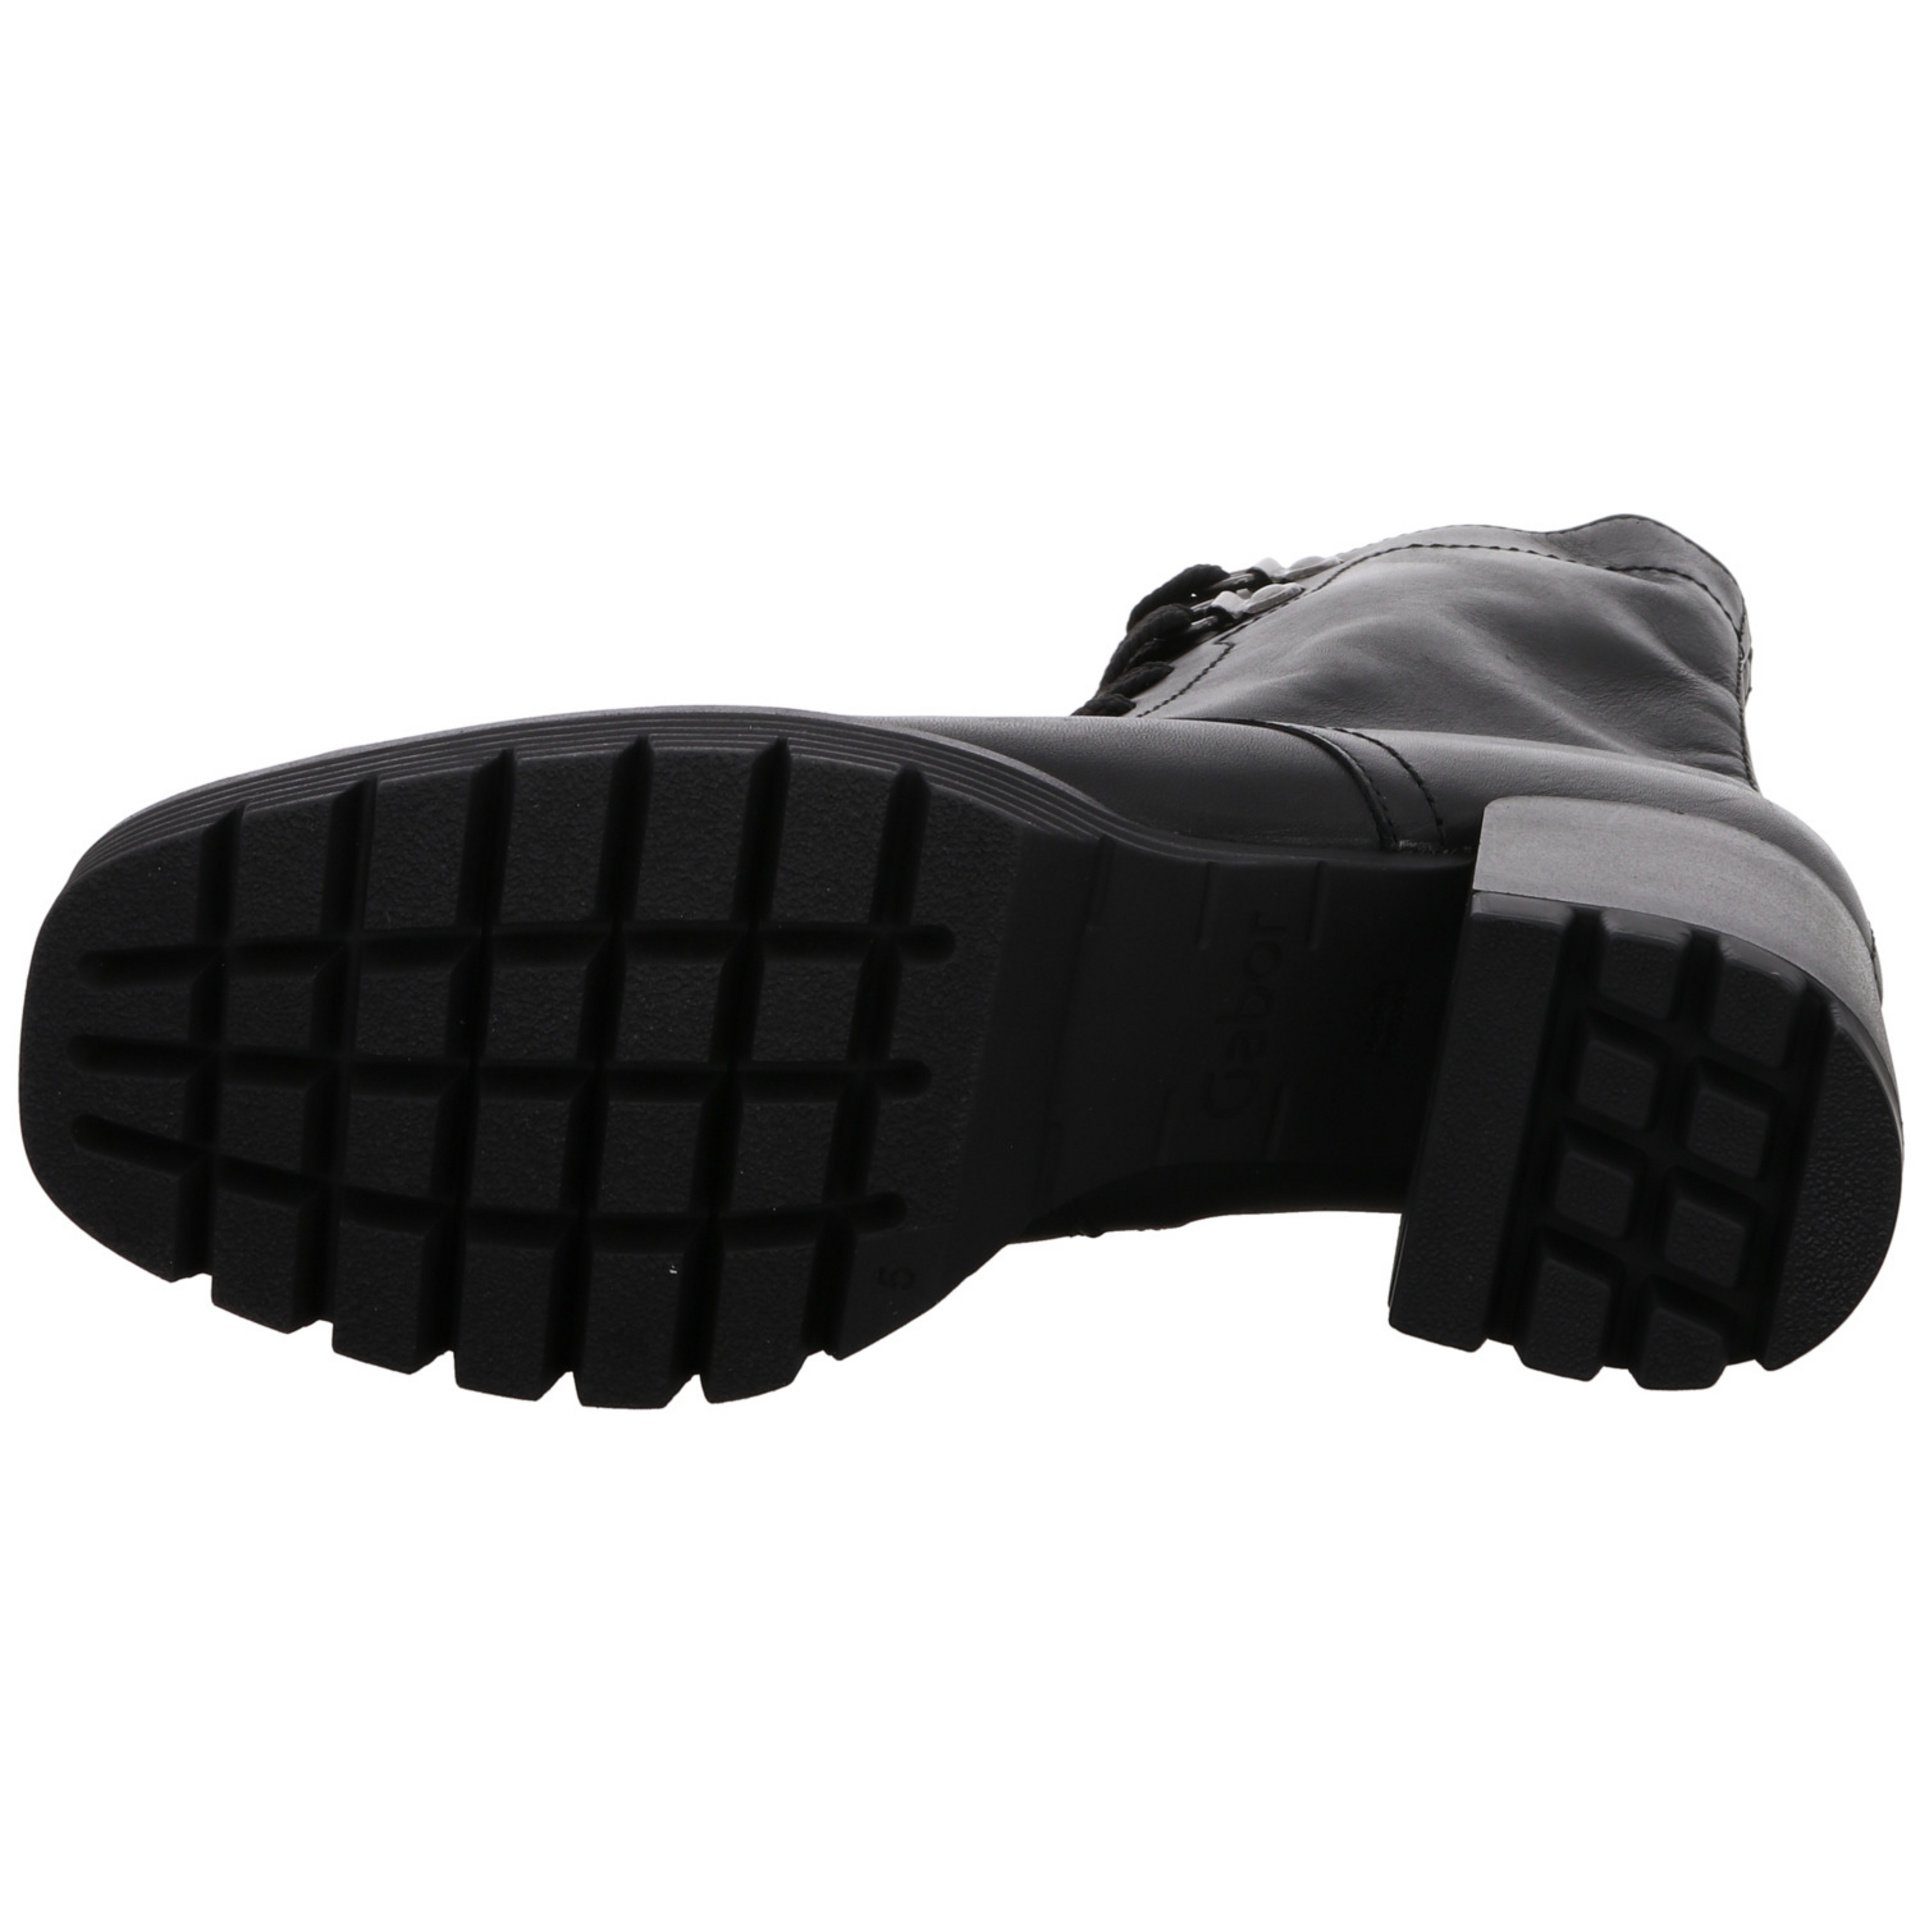 Gabor Damen Stiefeletten Schuhe Veloursleder Schnürstiefelette (Micro) Schnürstiefelette schwarz